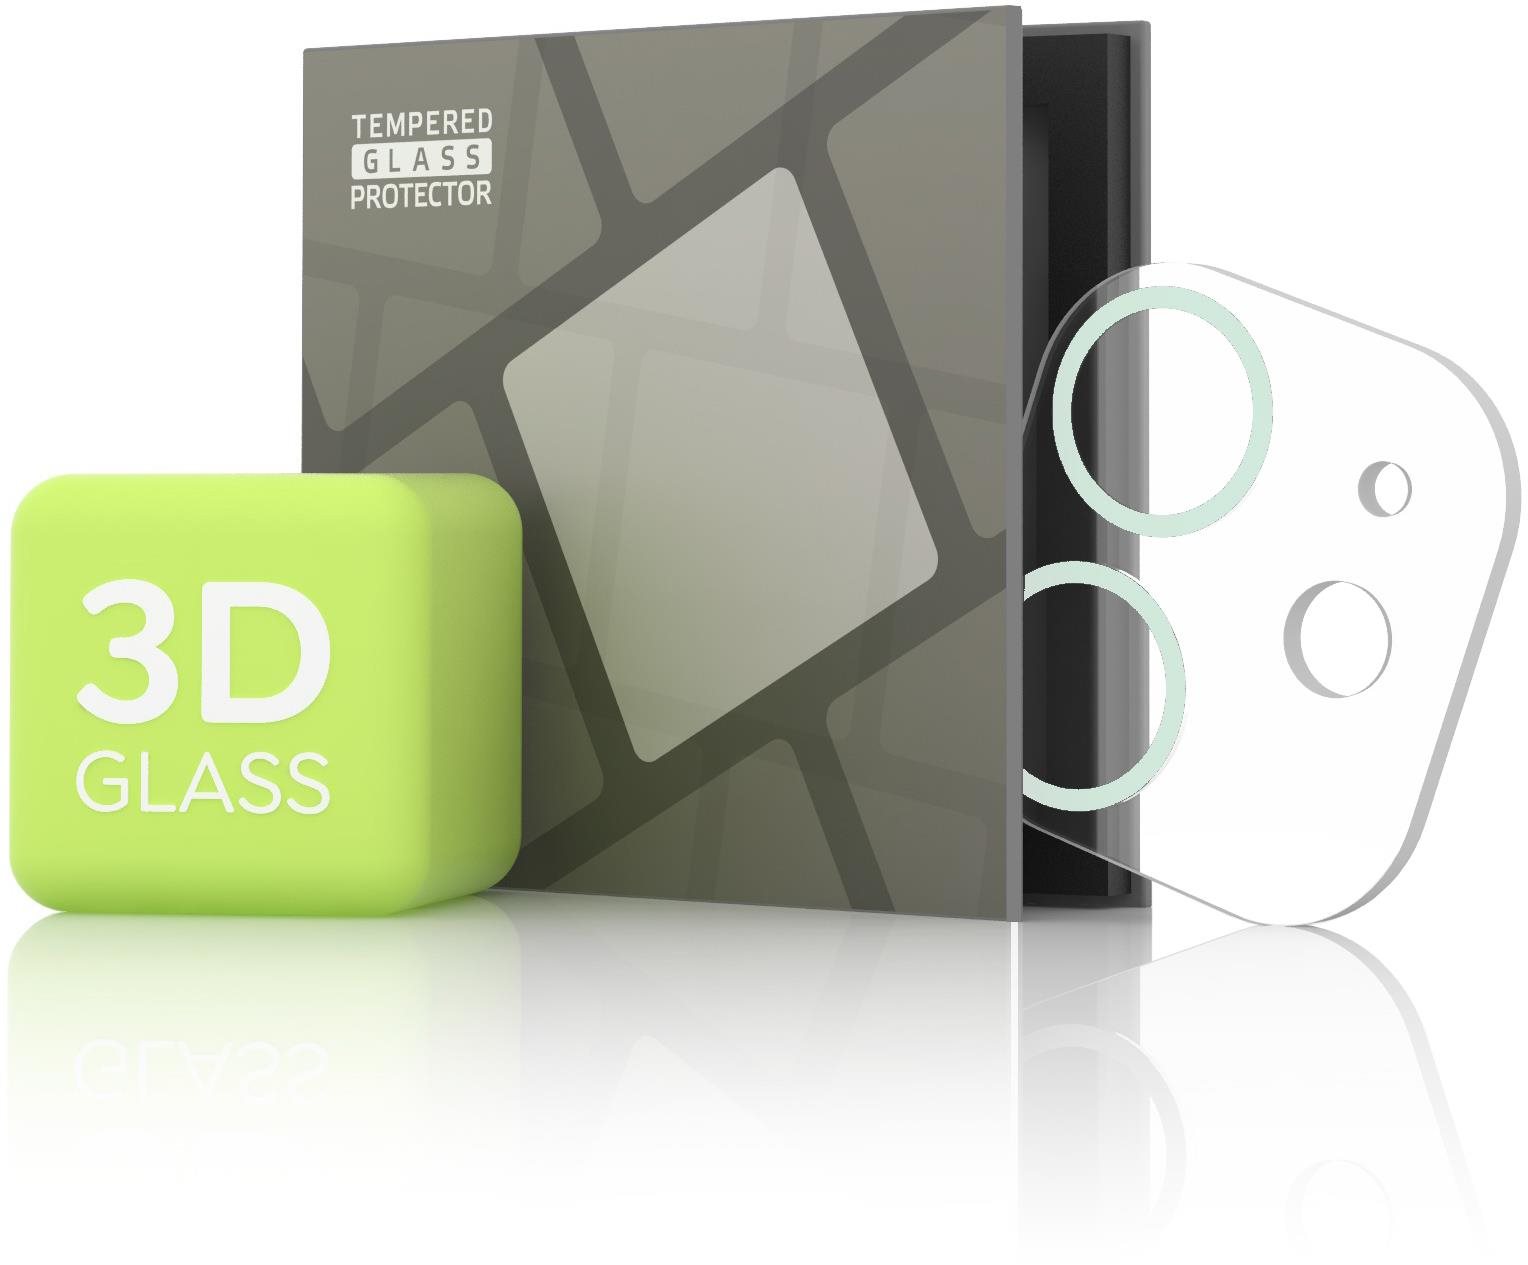 Tempered Glass Protector iPhone 11 / 12 mini kamerához, zöld színű